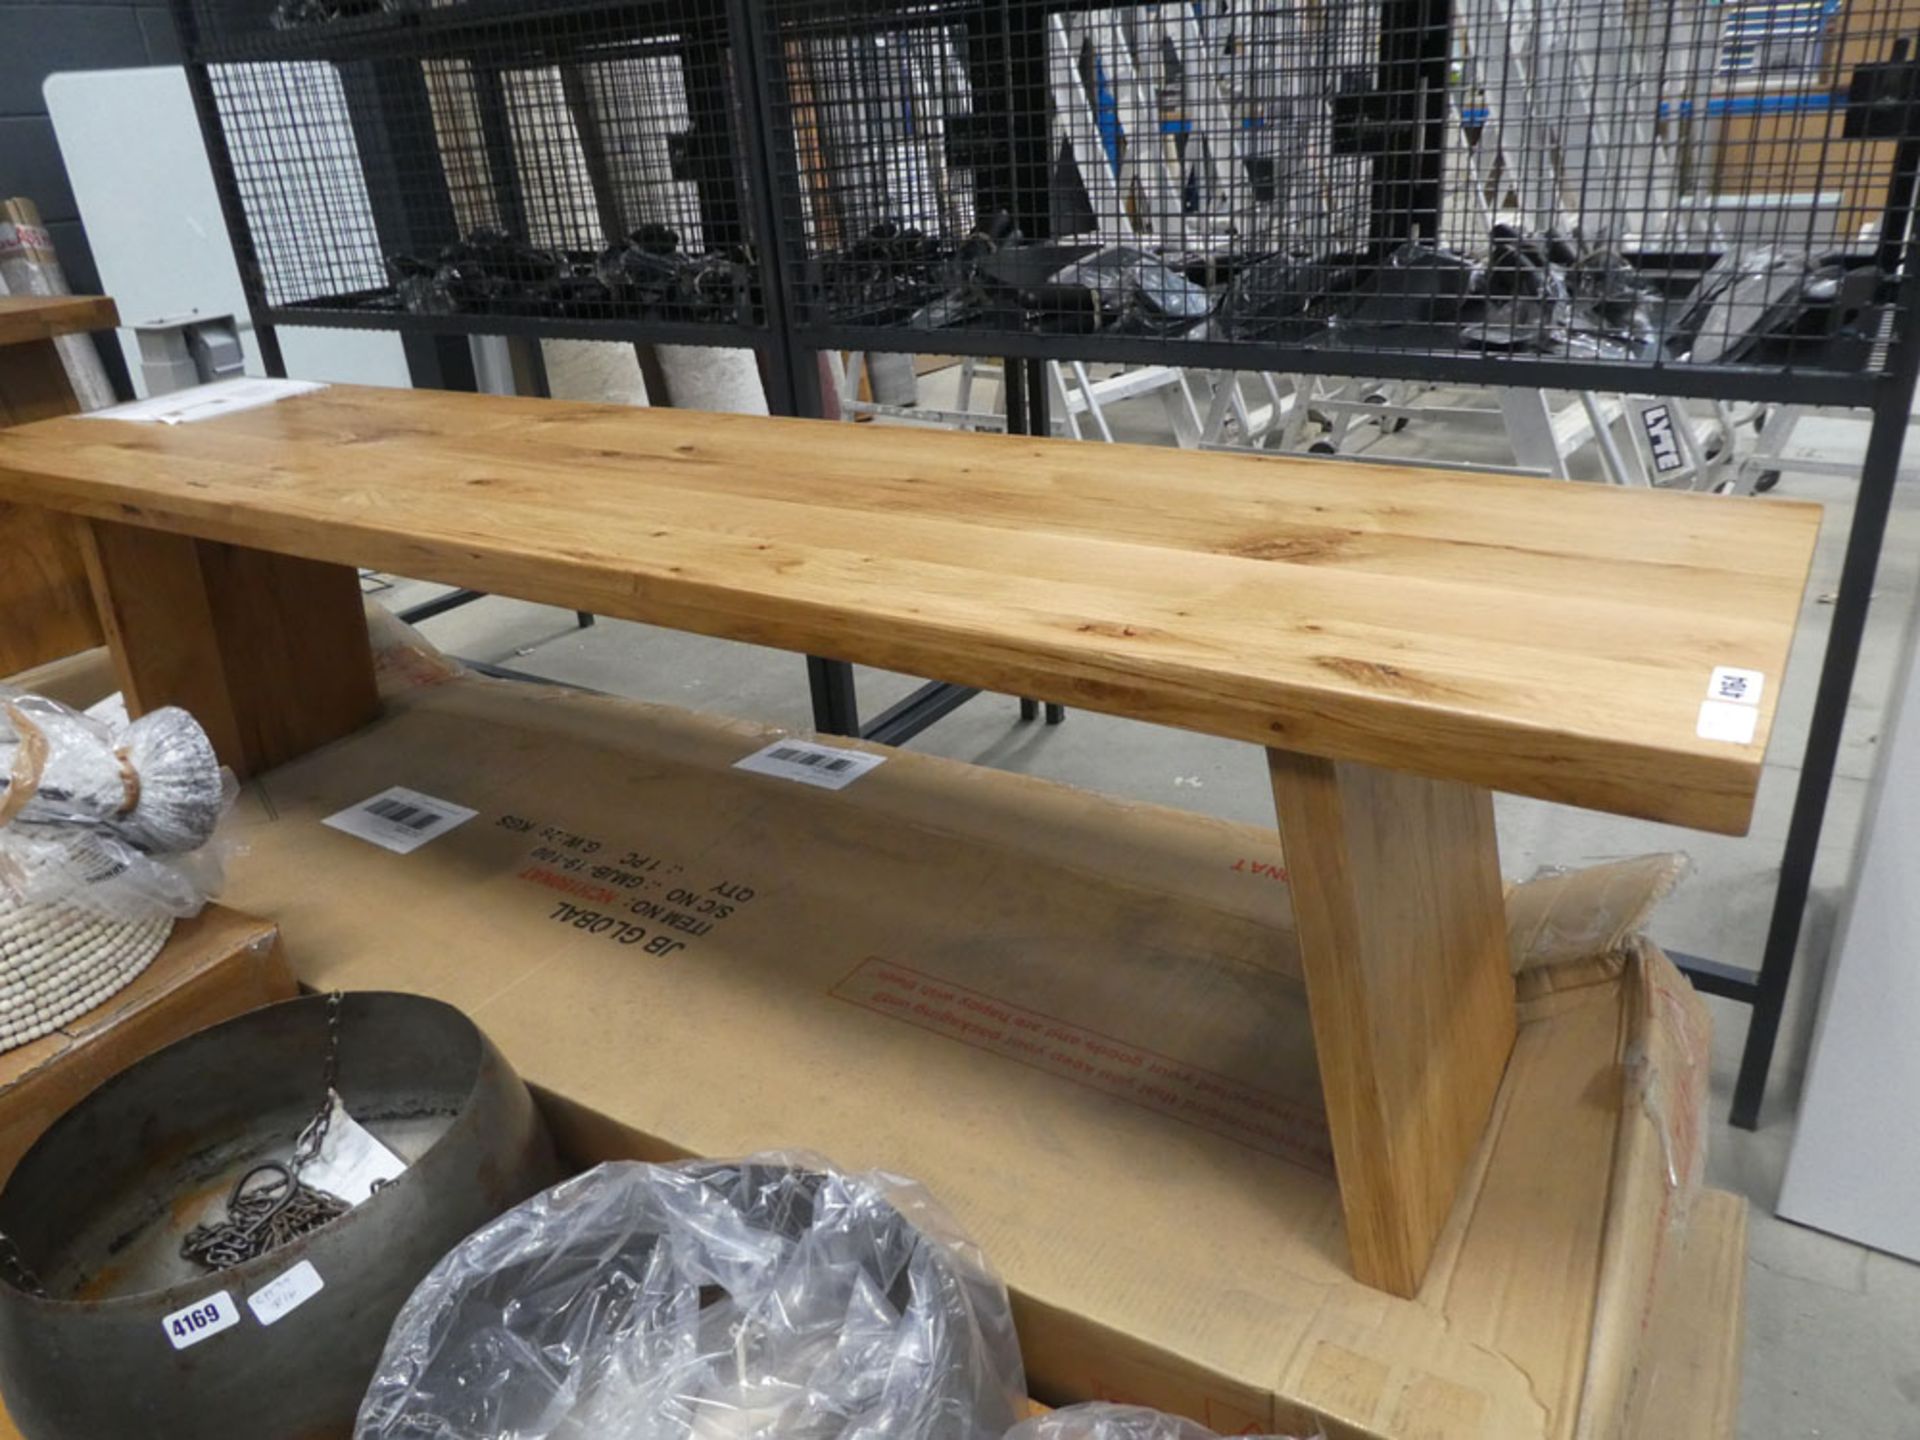 Flatpack oak FurnitureLand long bench